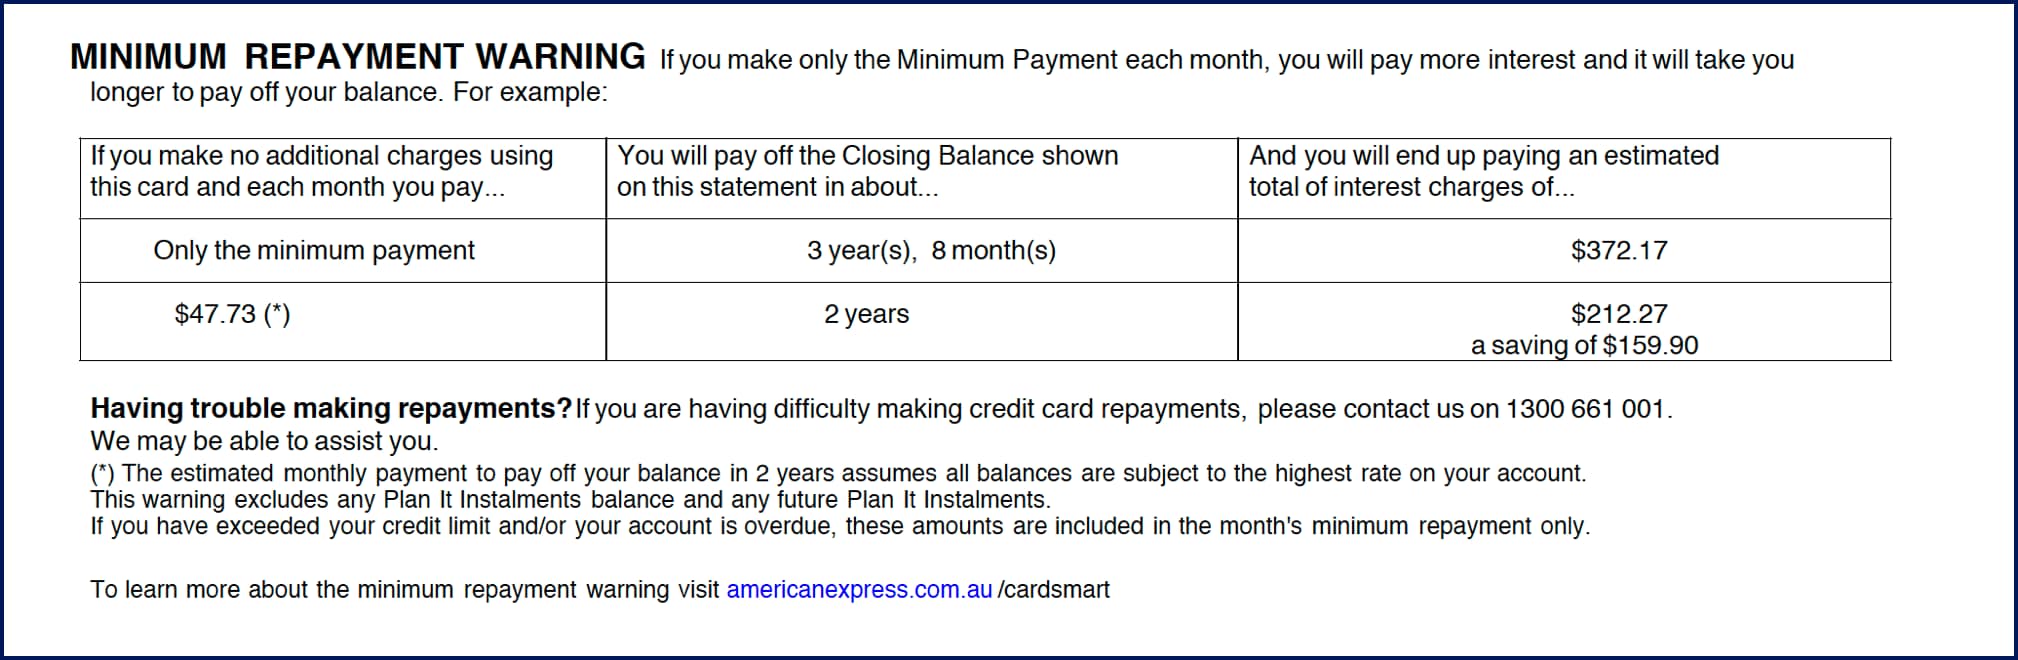 Minimum Payment Warning